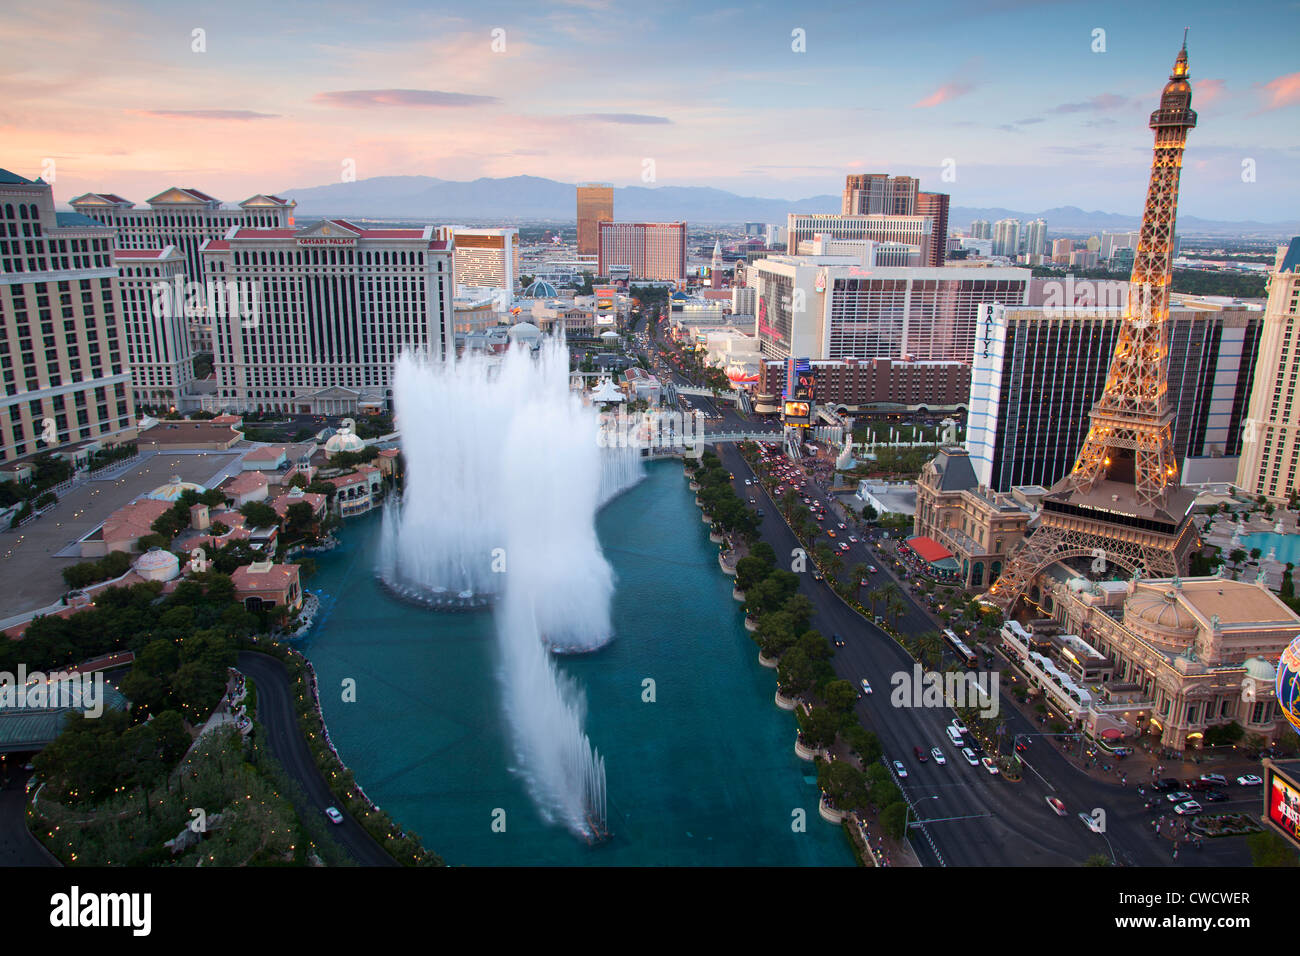 Fountains of Bellagio, Las Vegas, Nevada. Stock Photo